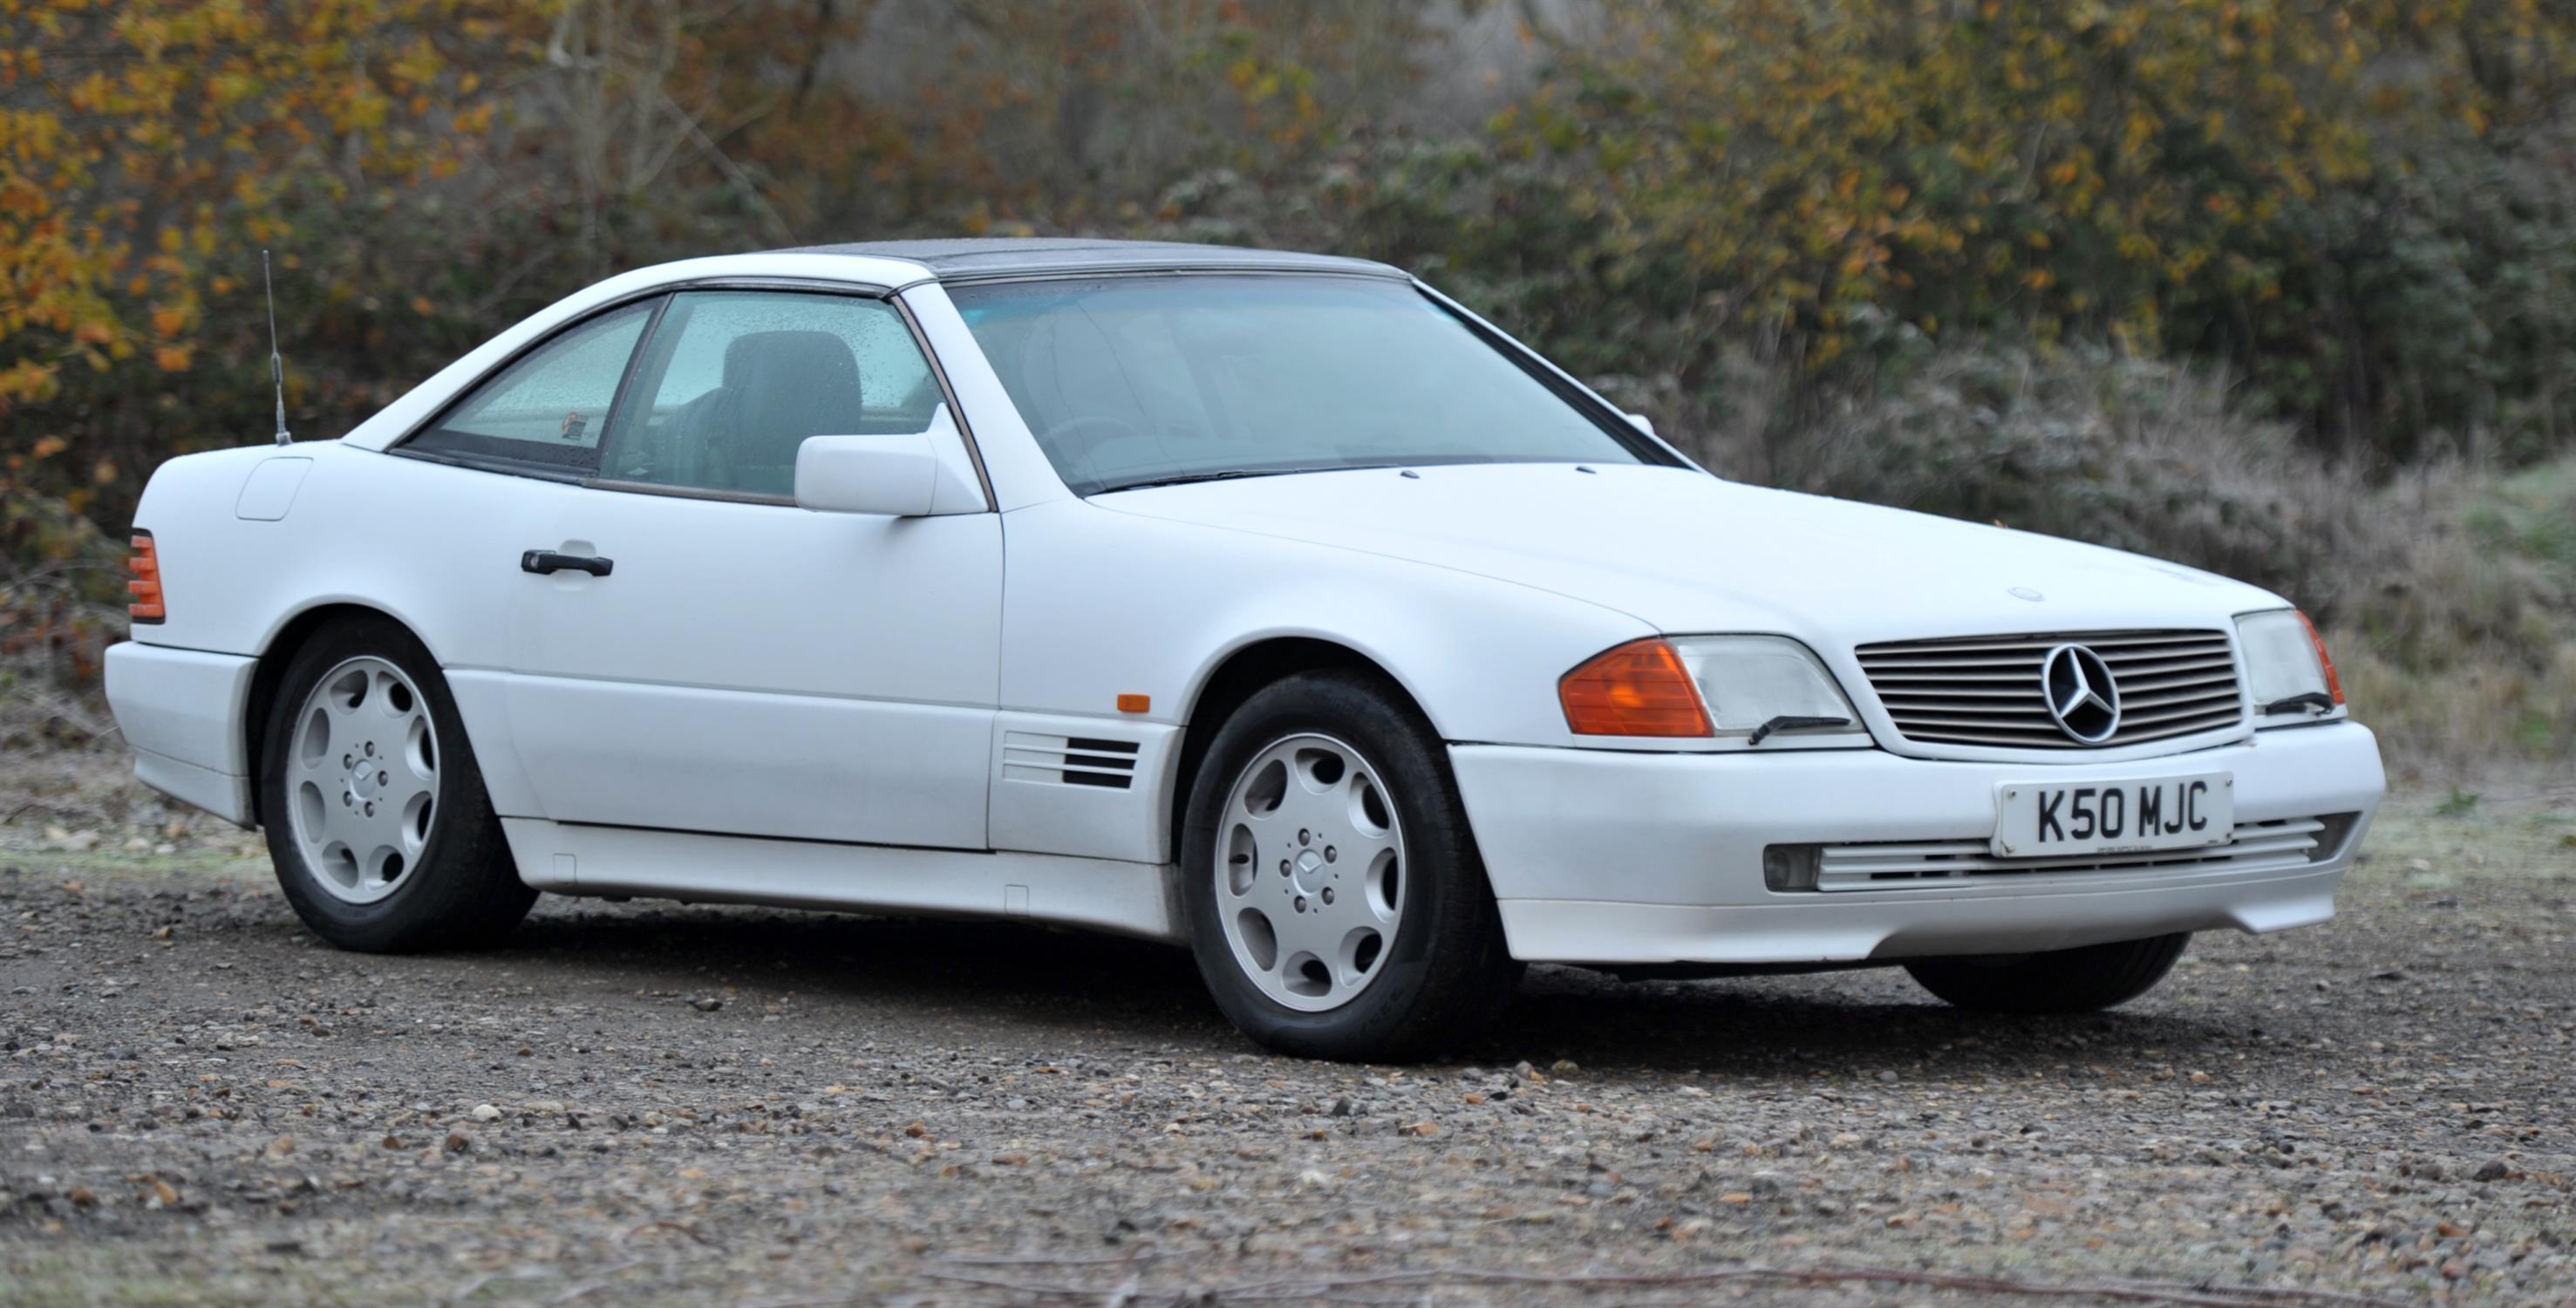 1993 Mercedes 500 SL R129 Petrol Convertible Automatic. Registration: K50 MJC. Mileage: 59,739.